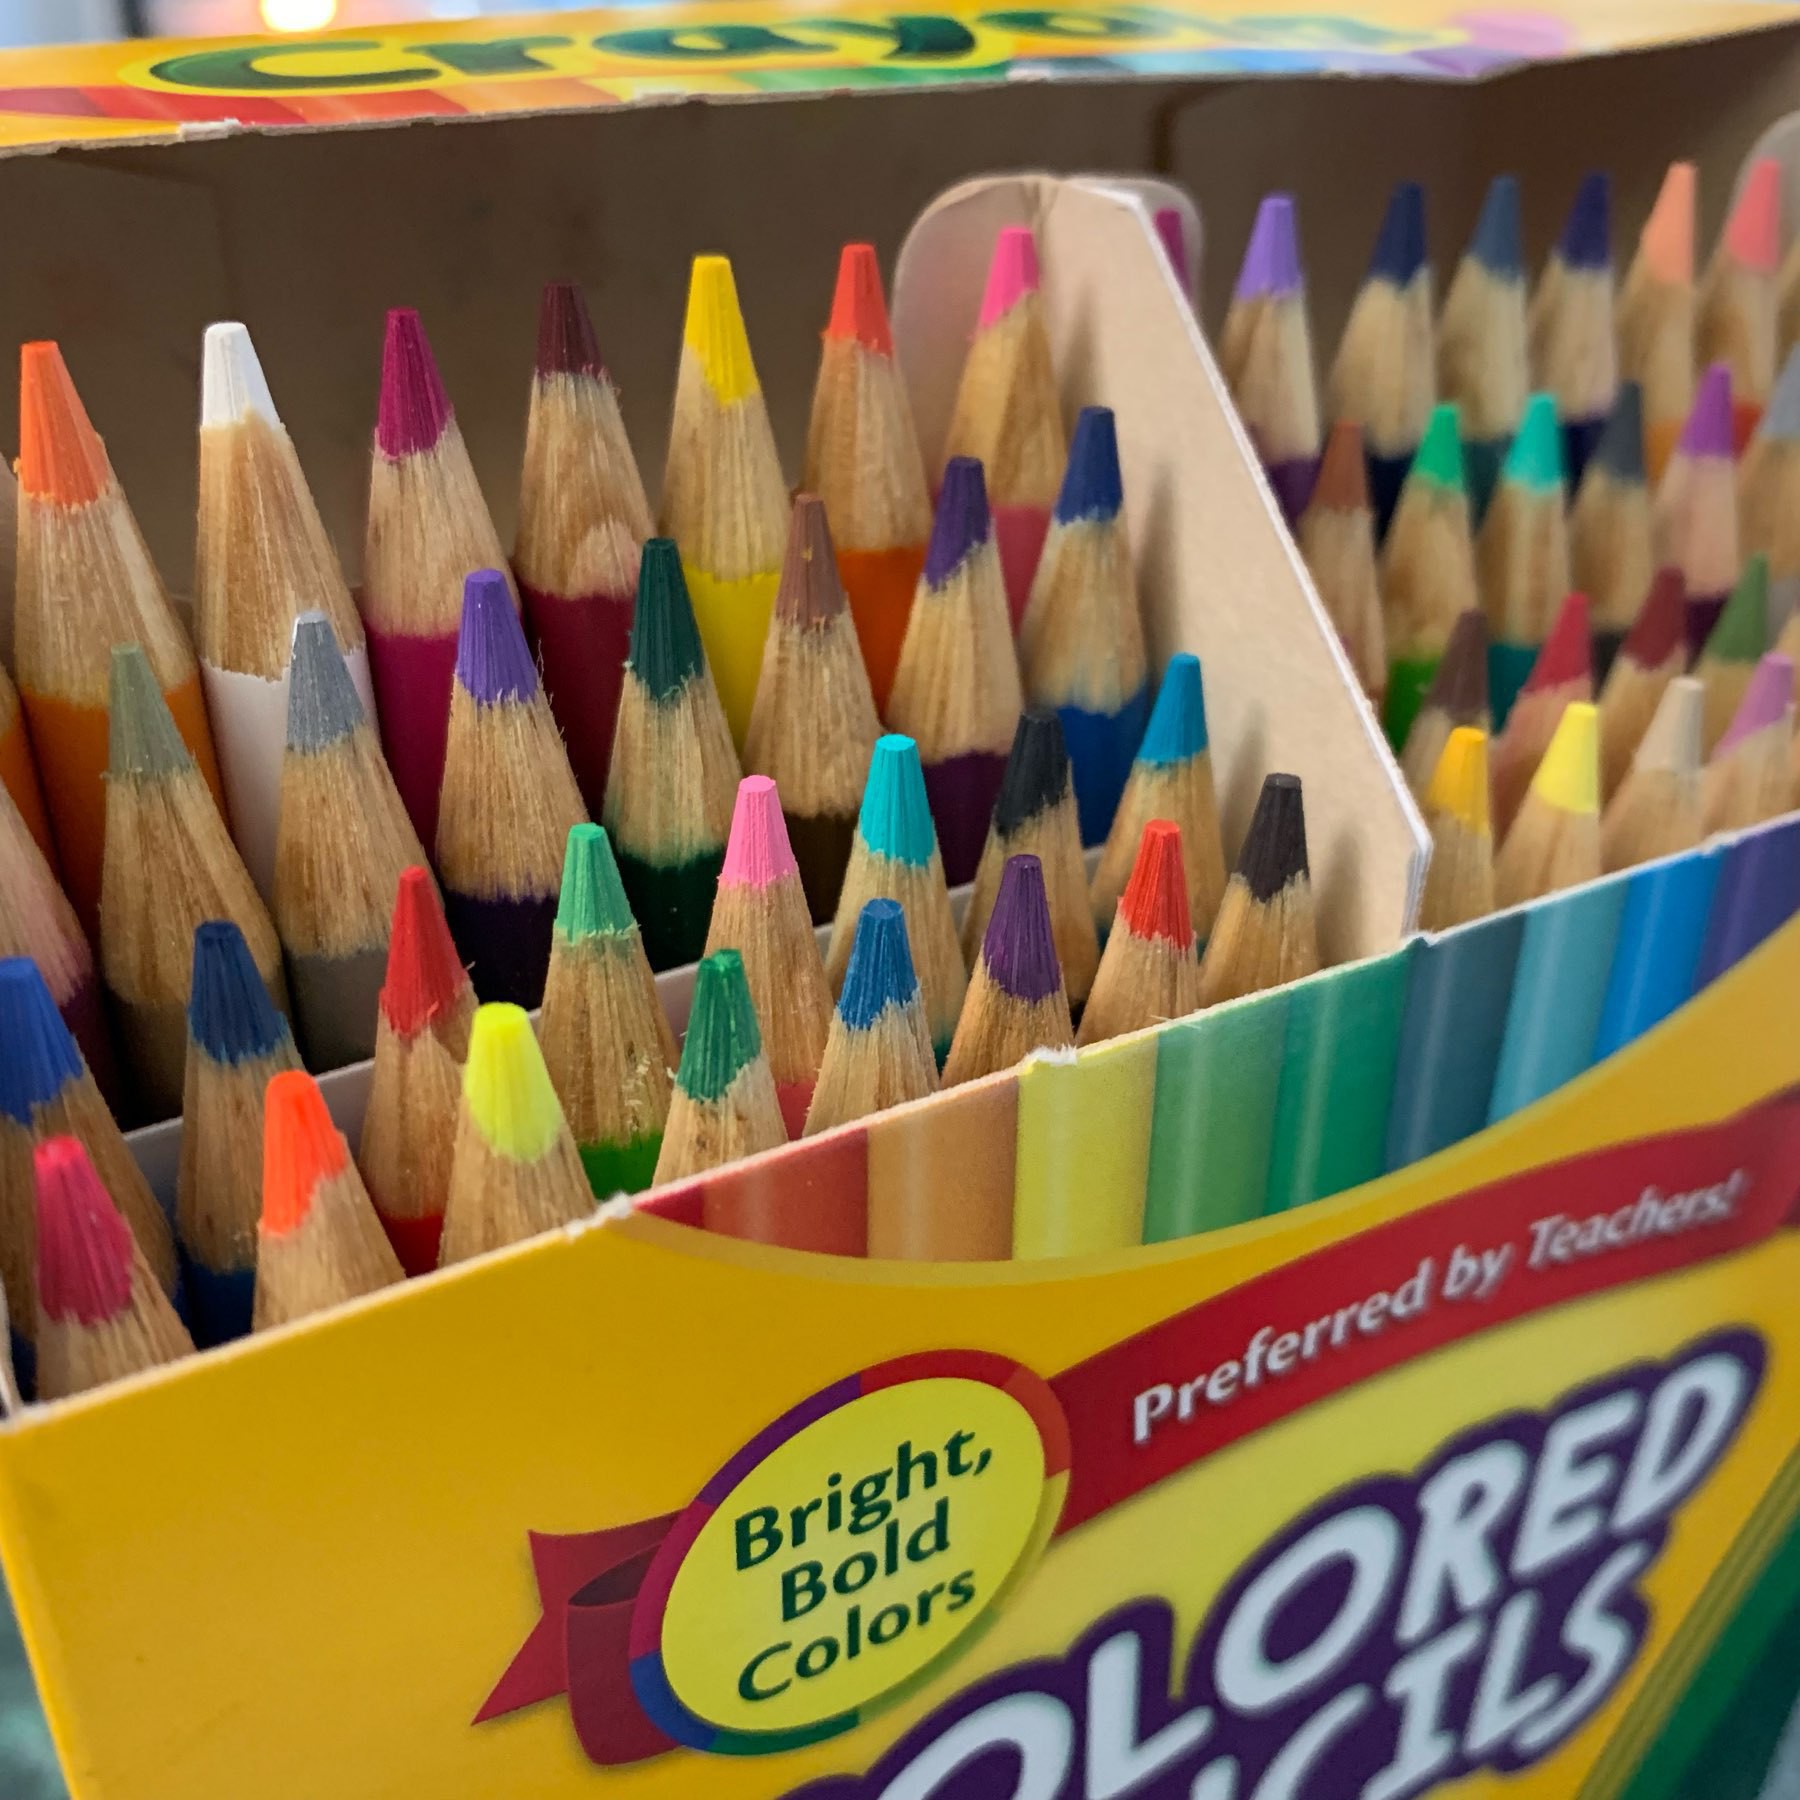 Brand new box of Crayola colored pencils. 